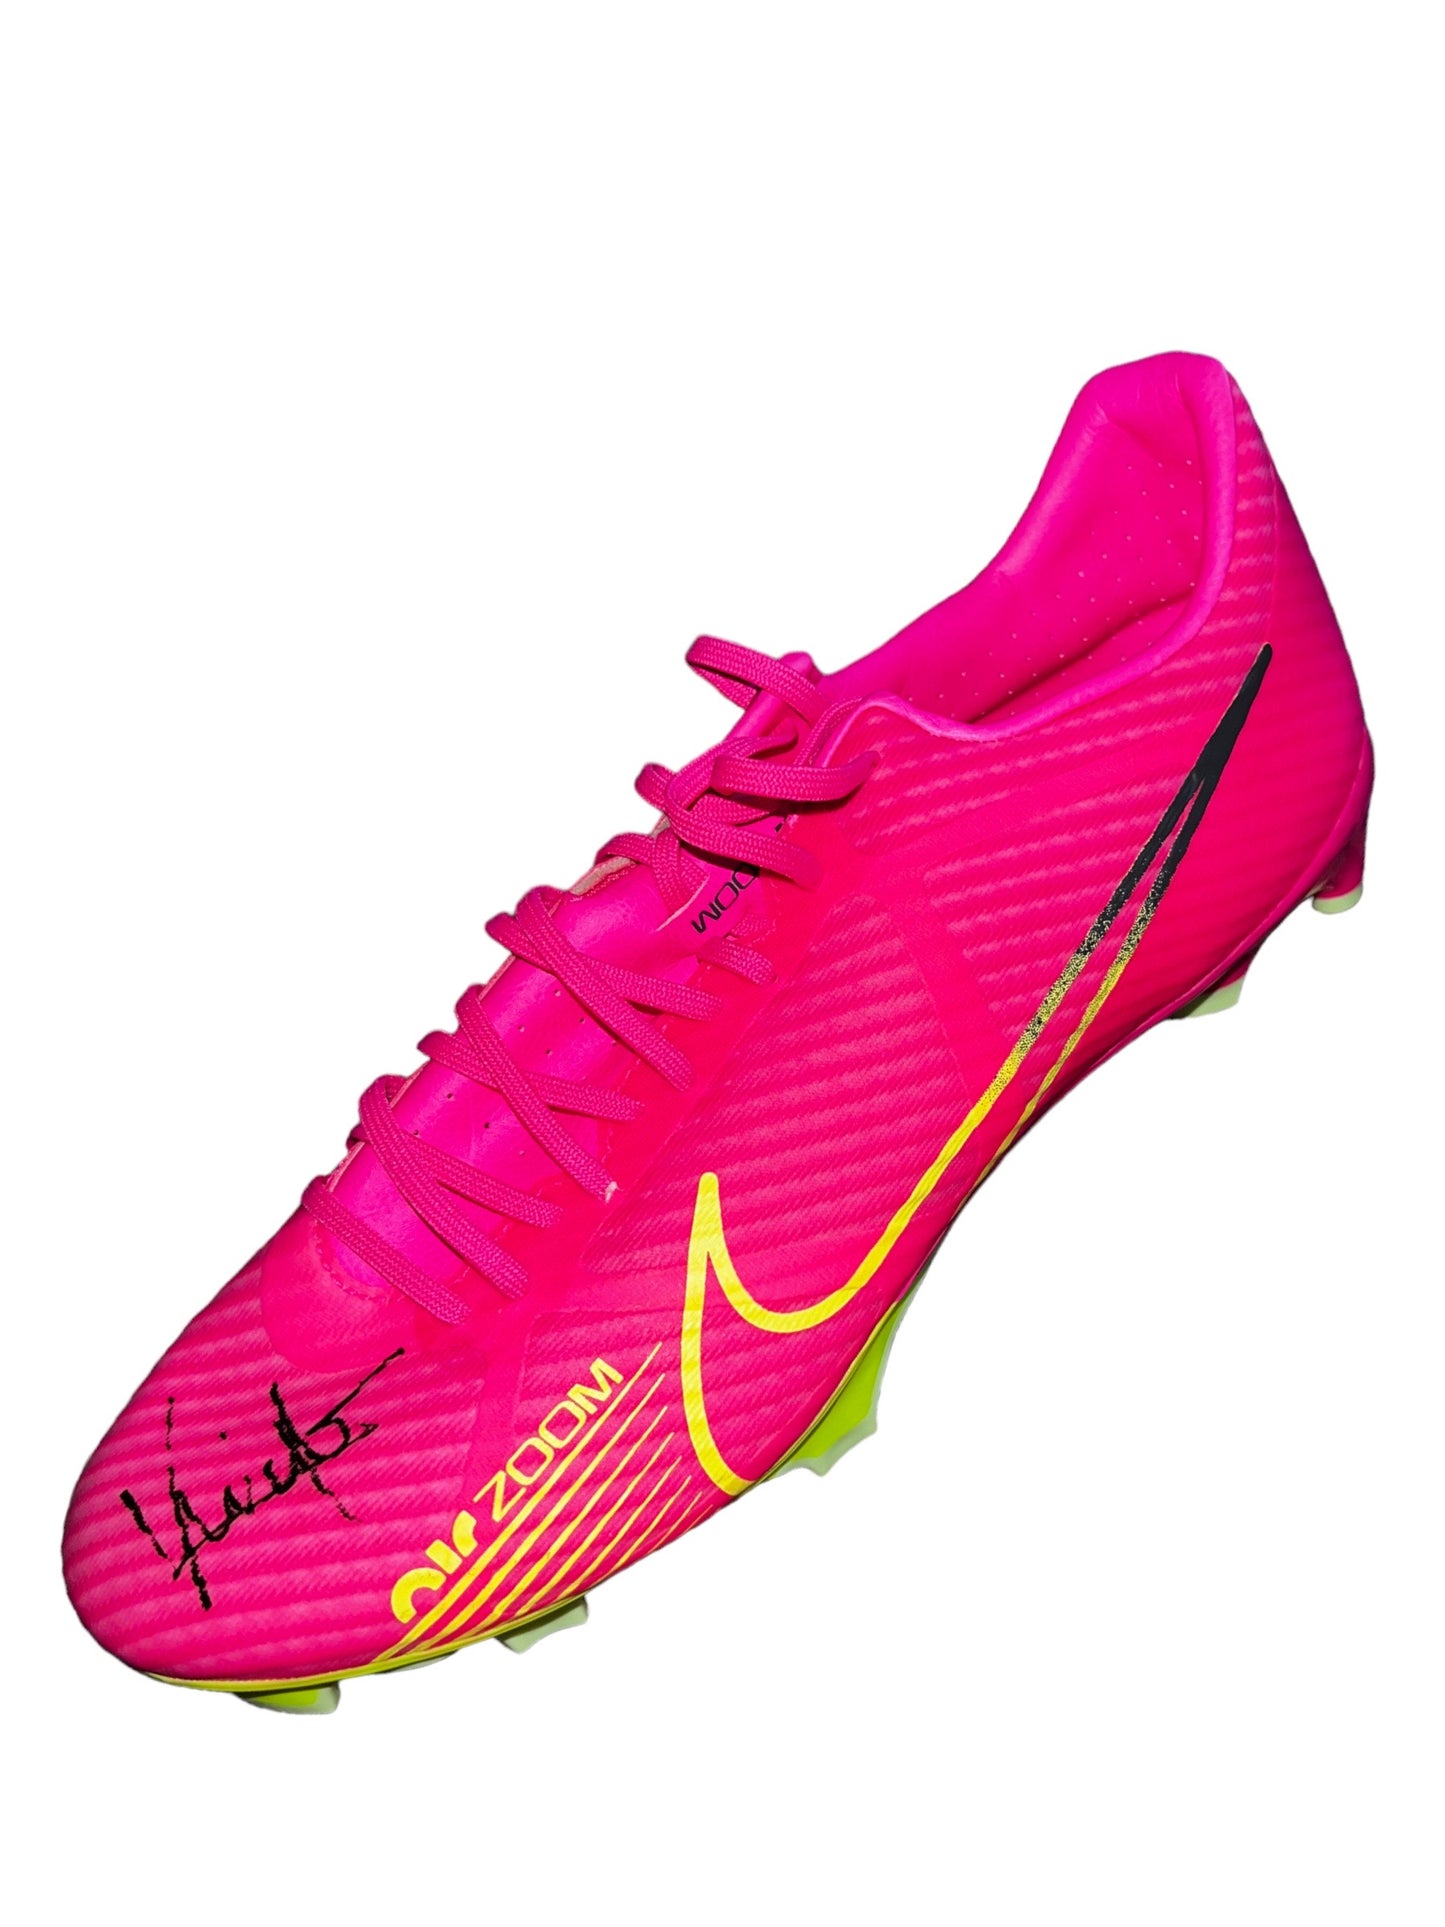 Kingsley Coman Signed Nike Football Boot